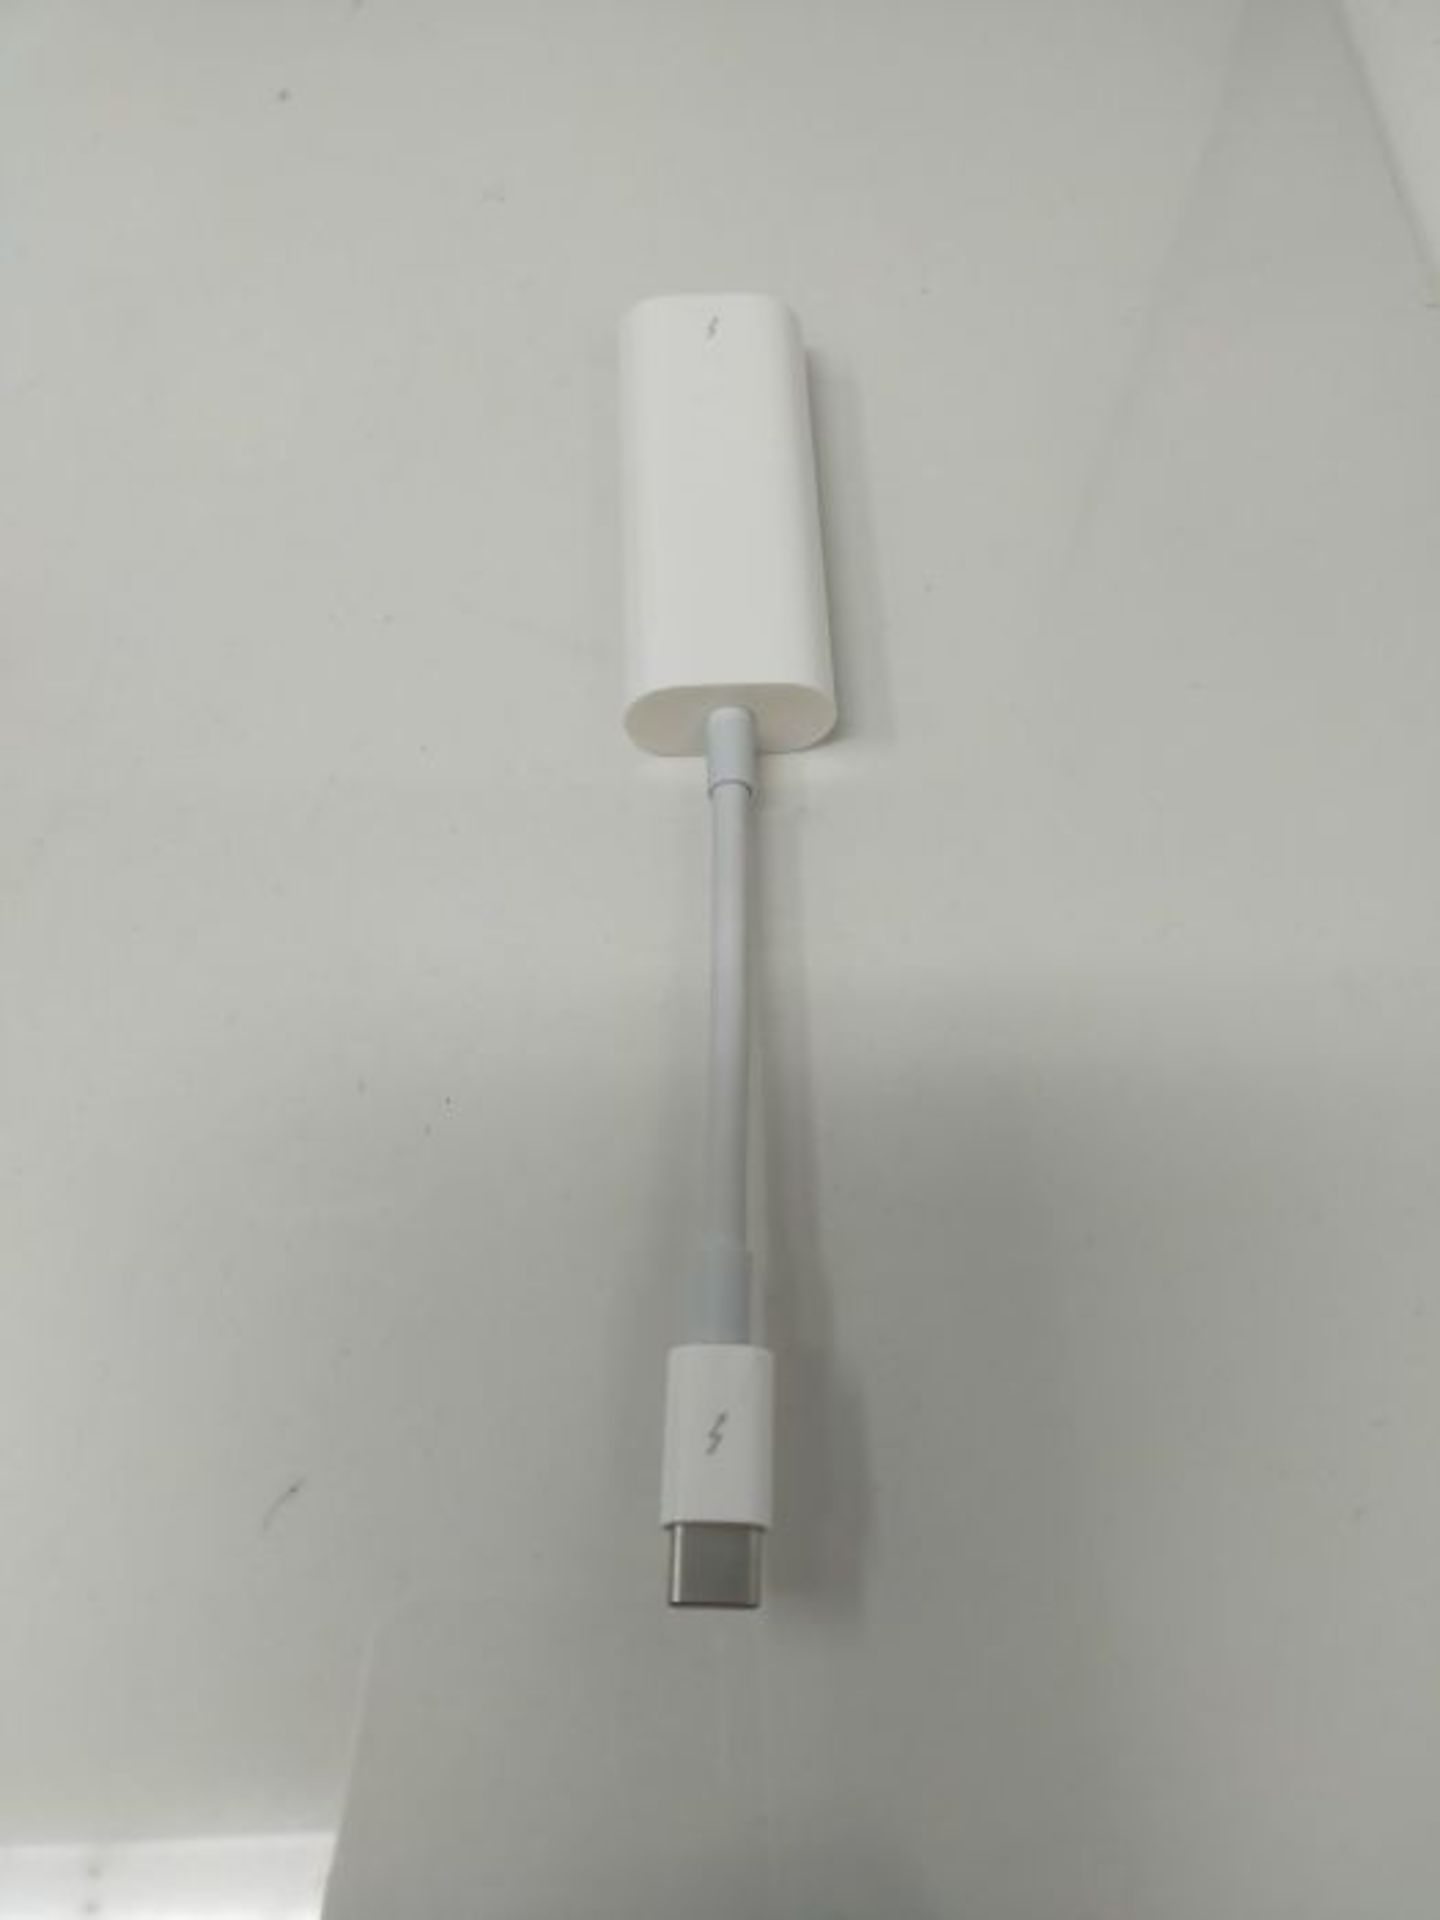 RRP £72.00 Apple Thunderbolt 3 (USB-C) to Thunderbolt 2 Adapter - Image 2 of 2